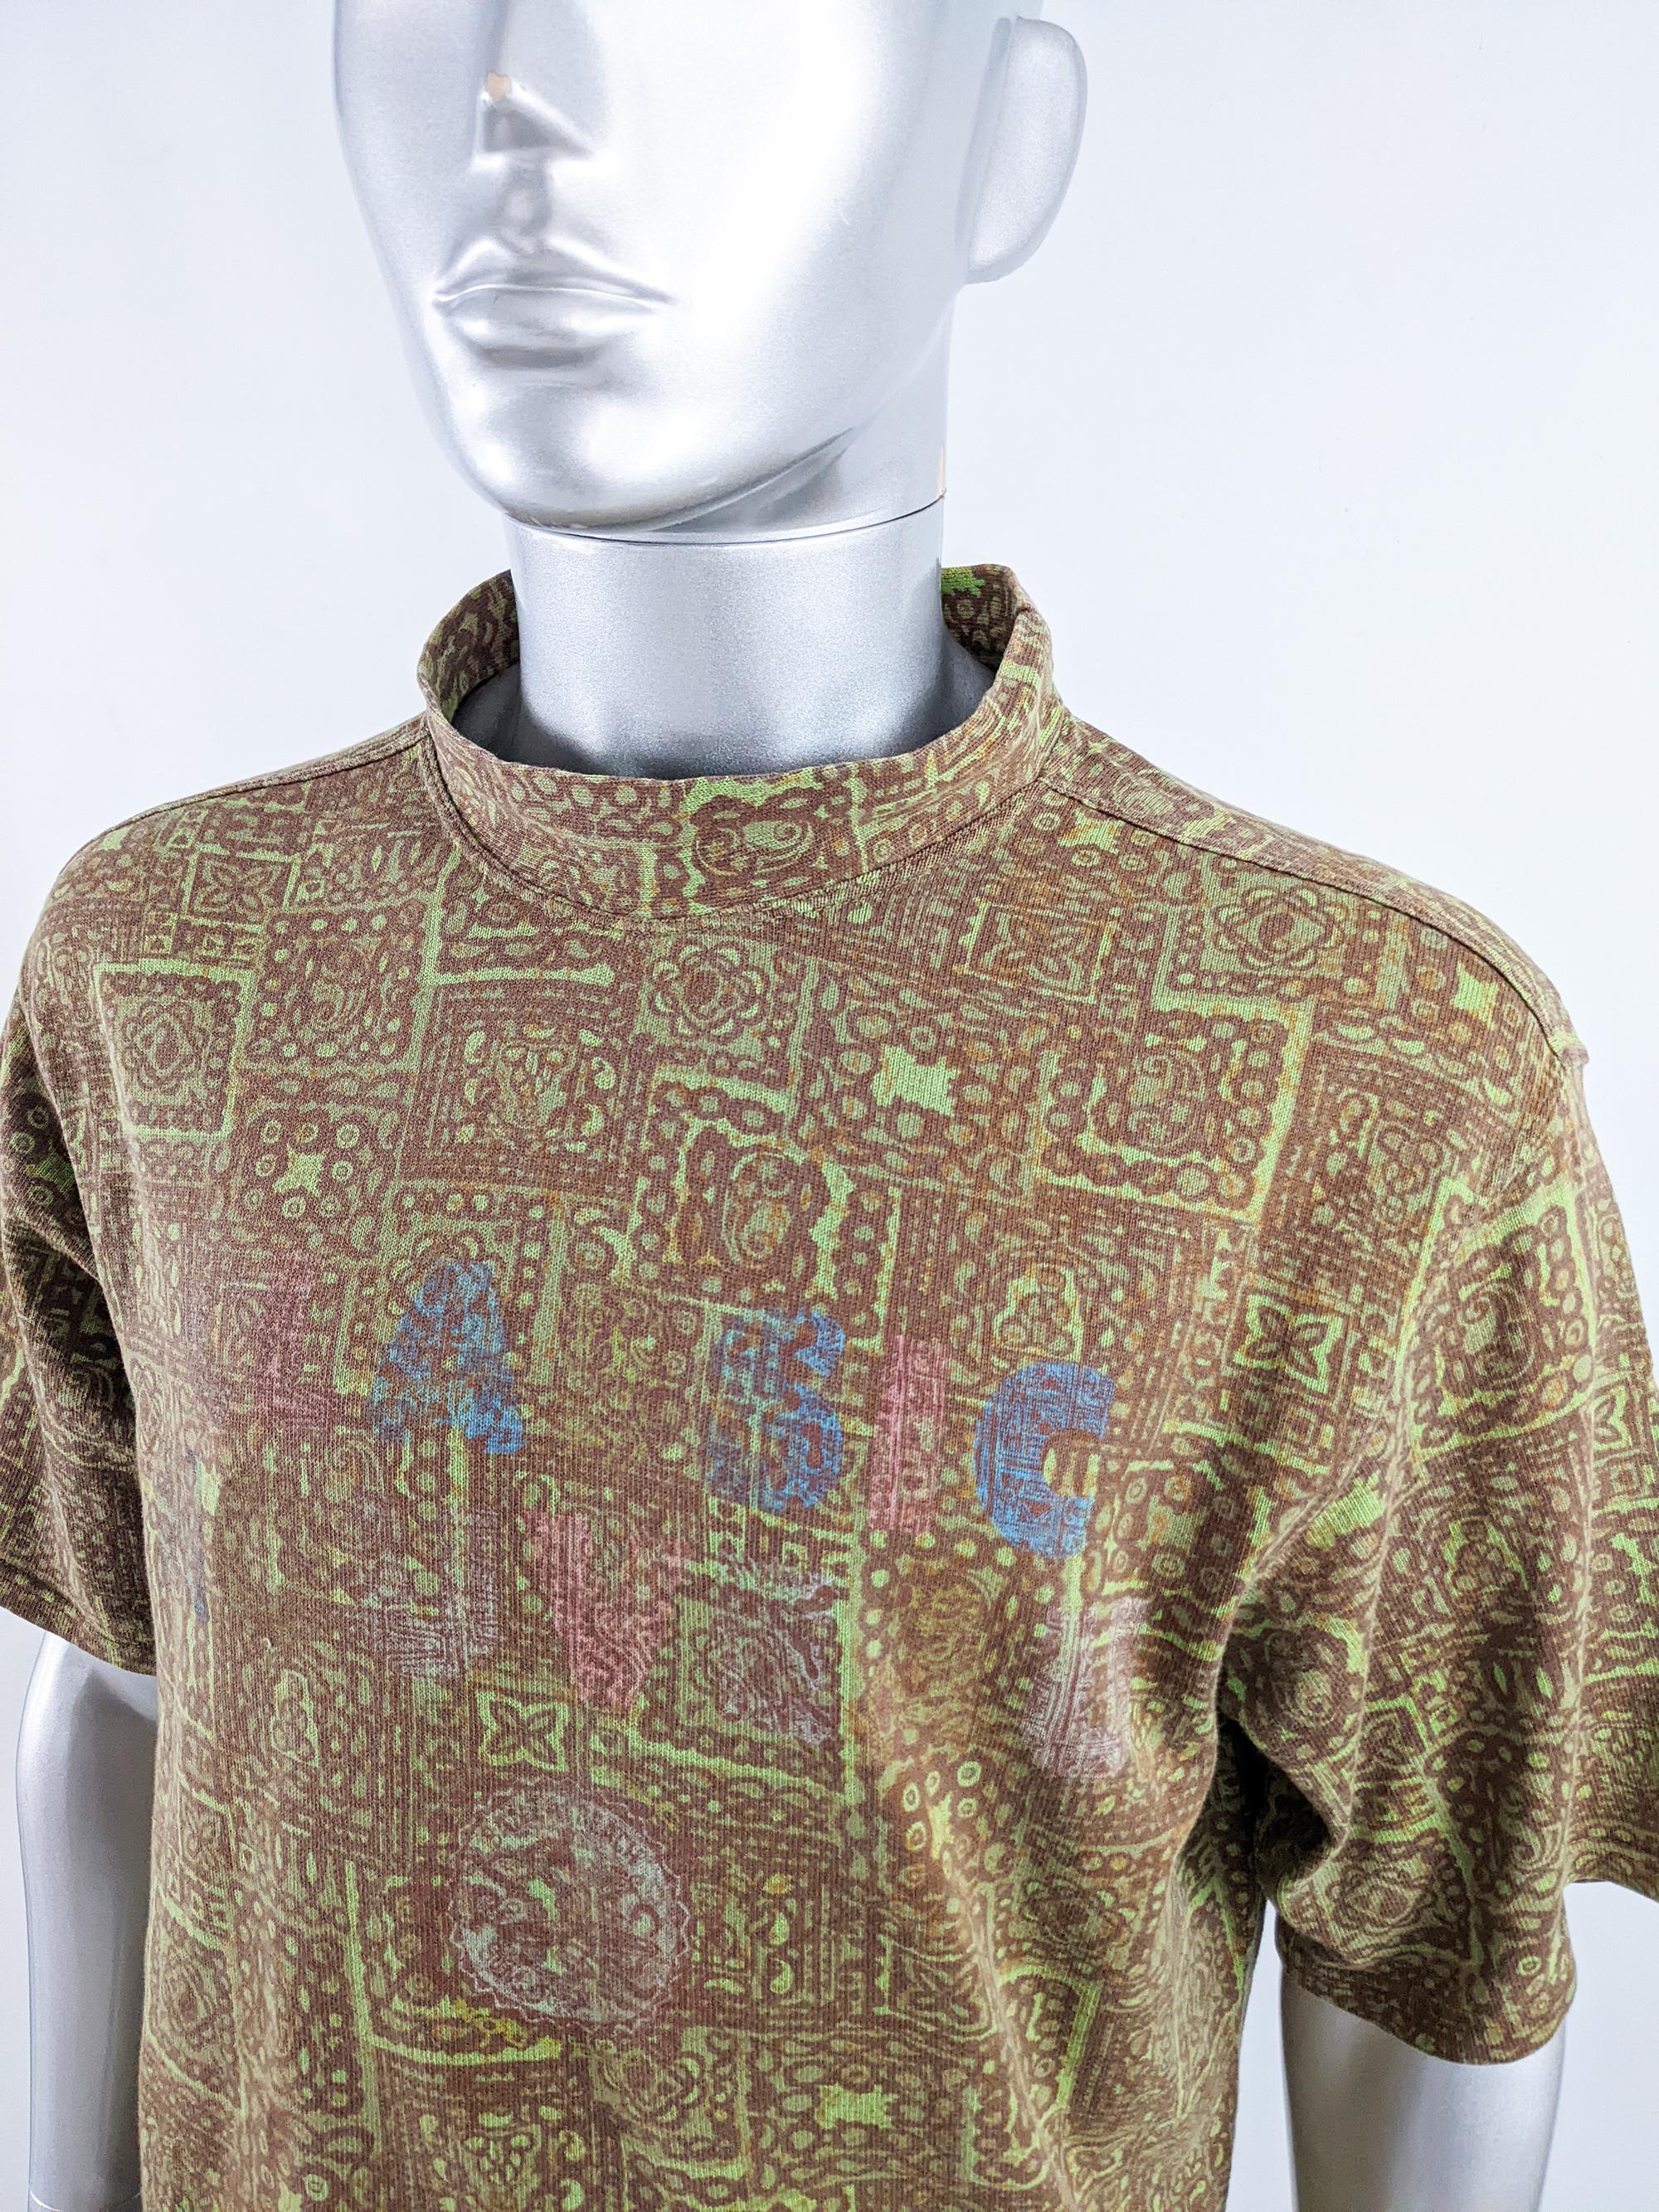 Fiorucci Vintage 1980s Green & Brown Surfer Aztec TShirt Rave Tee Shirt For Sale 2